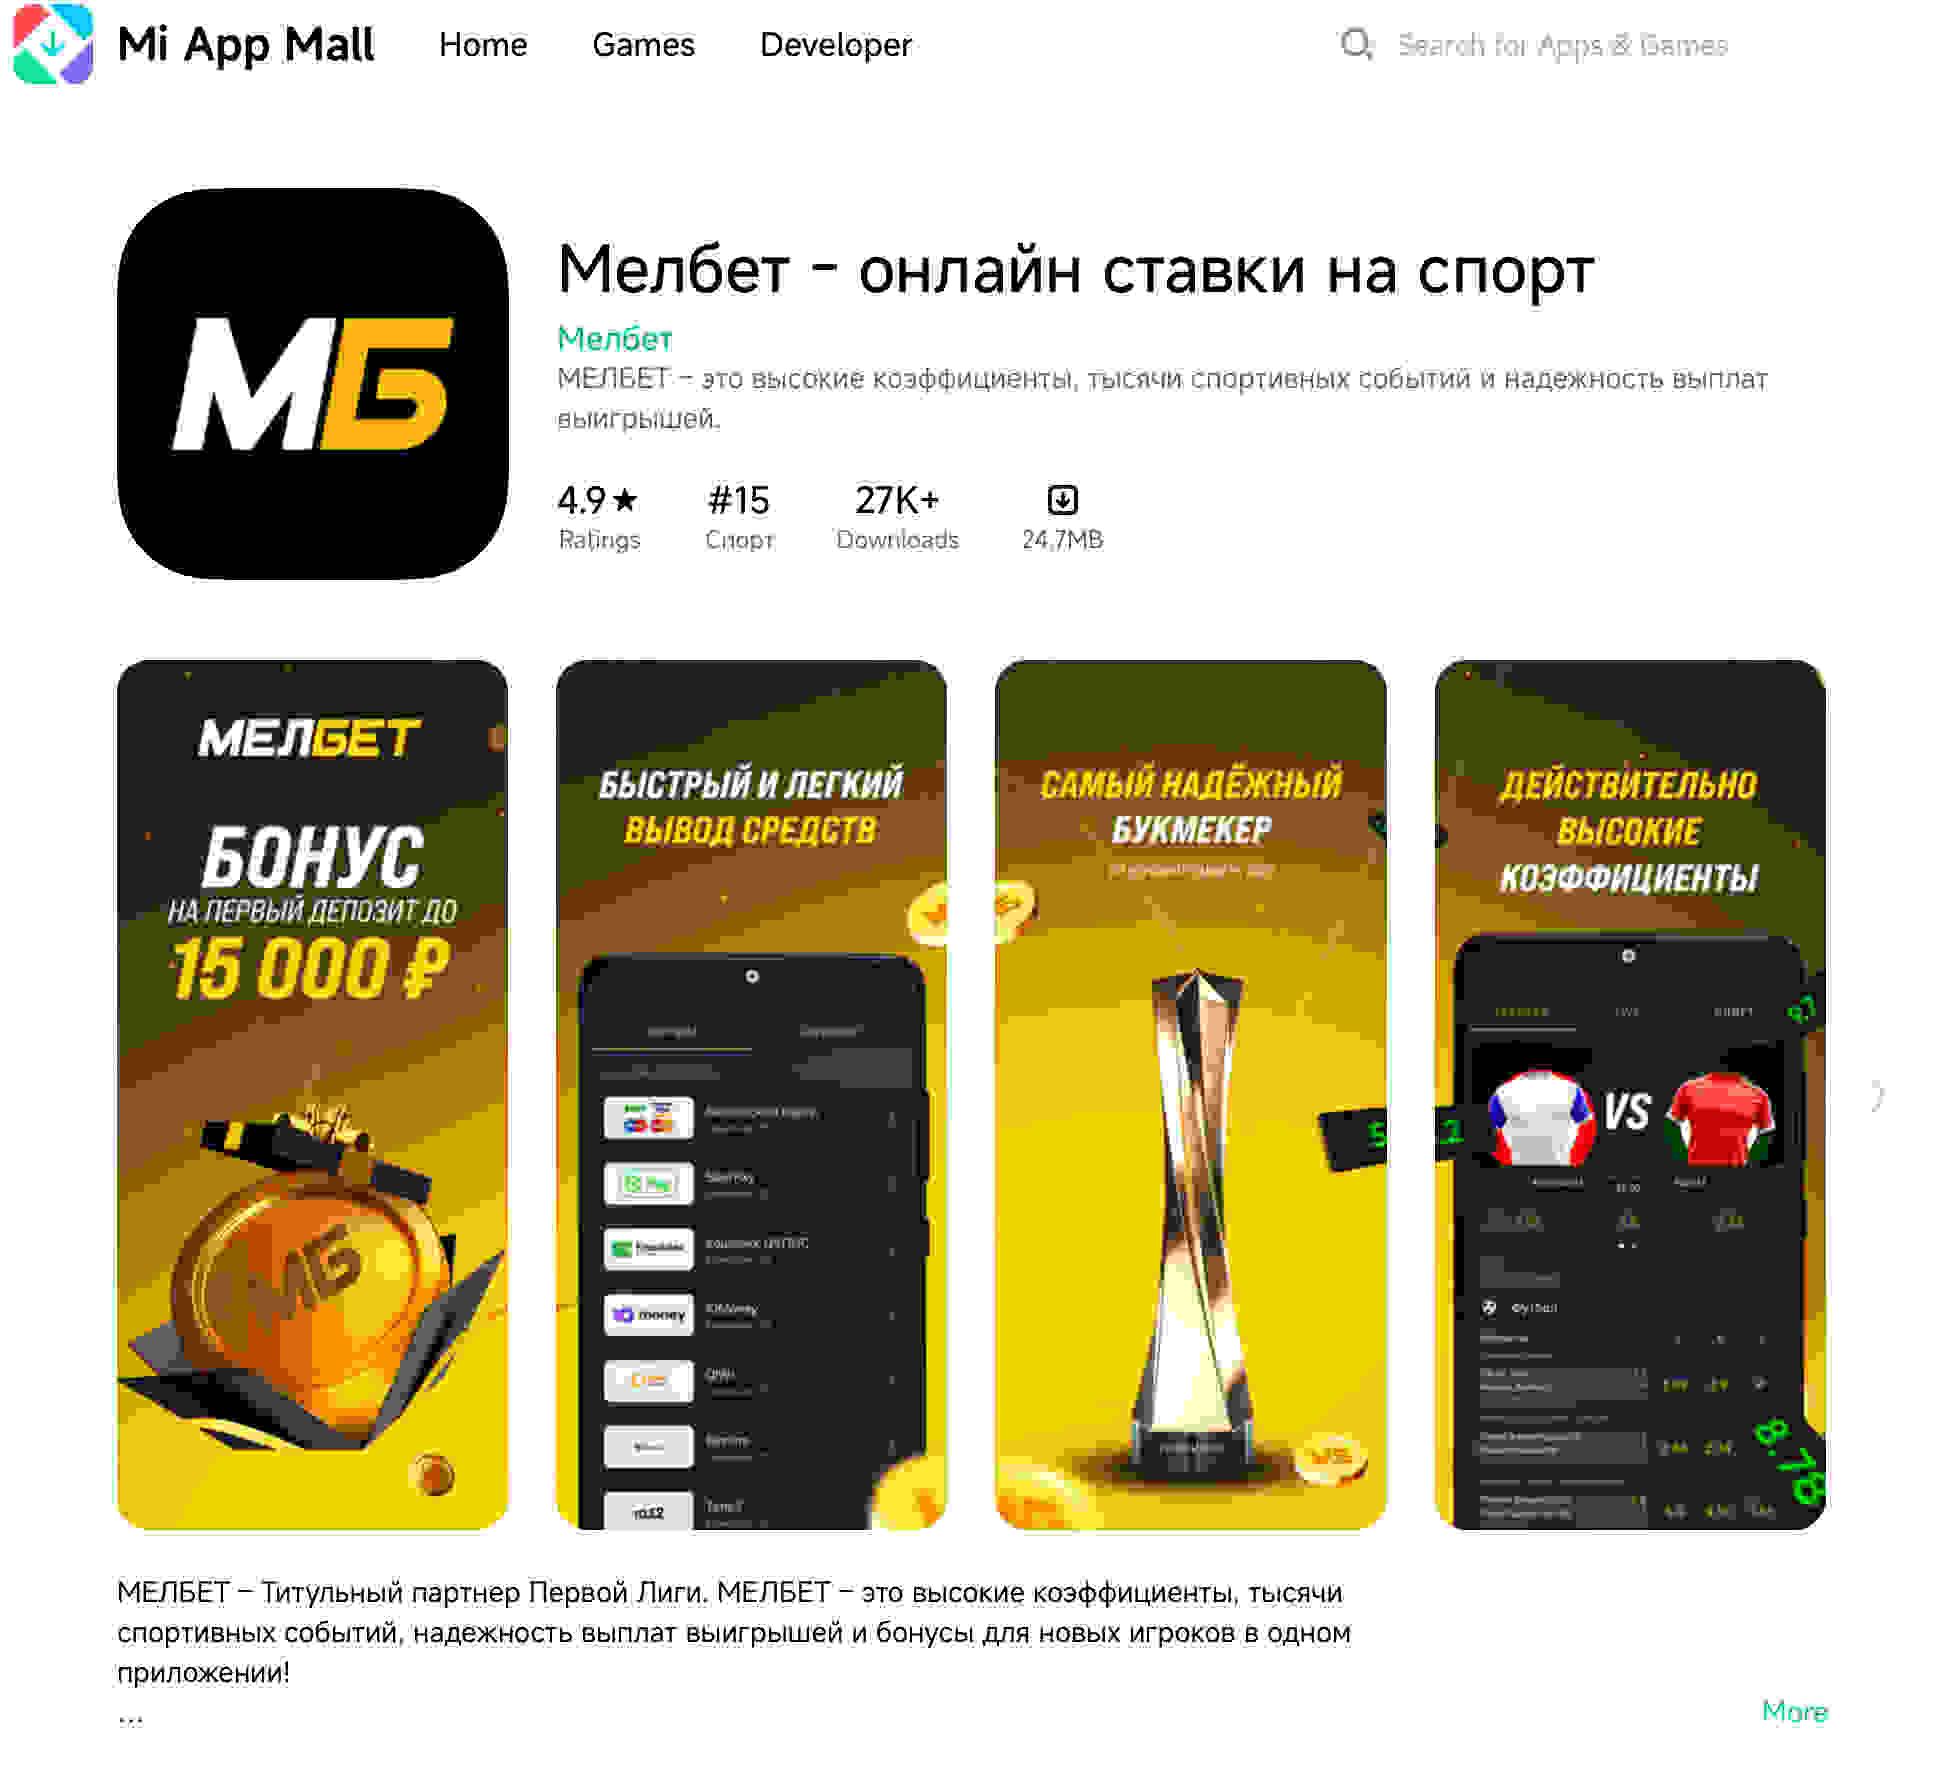 Melbet App Bangladesh: Download, Registration, and Login Guide